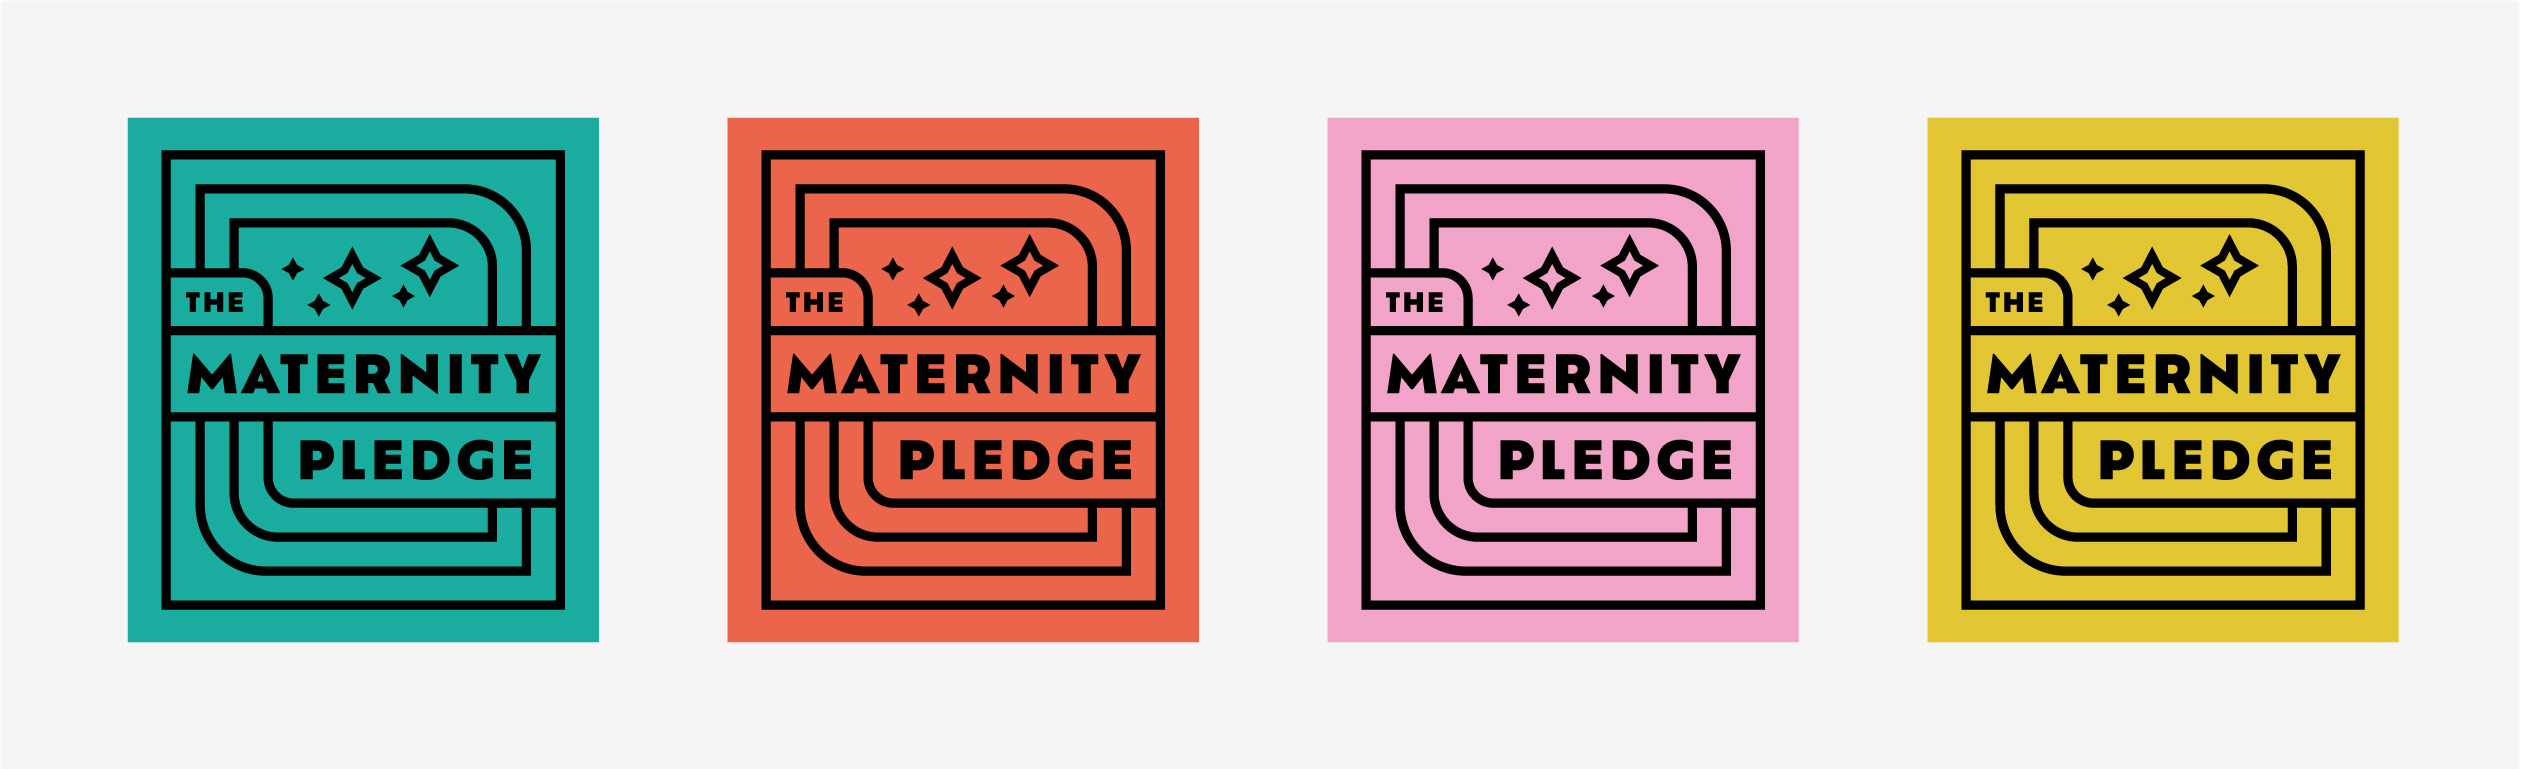 The Maternity Pledge logos in four colourways